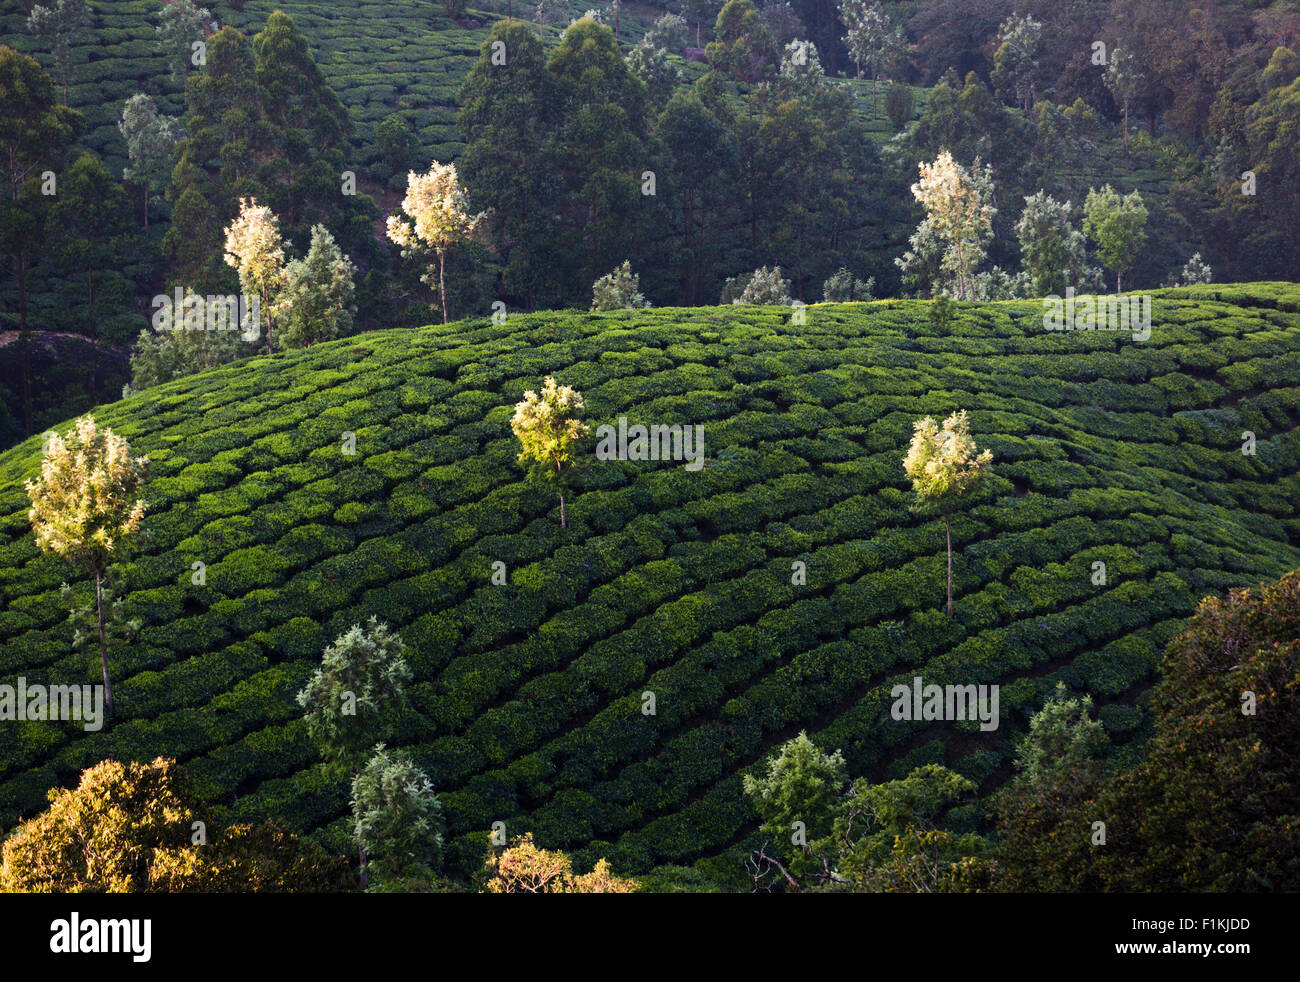 Tea plantation from Pothamedu Overlook, National Highway 49 near Munnar, India. Silver oak trees provide moisture to tea plants. Stock Photo